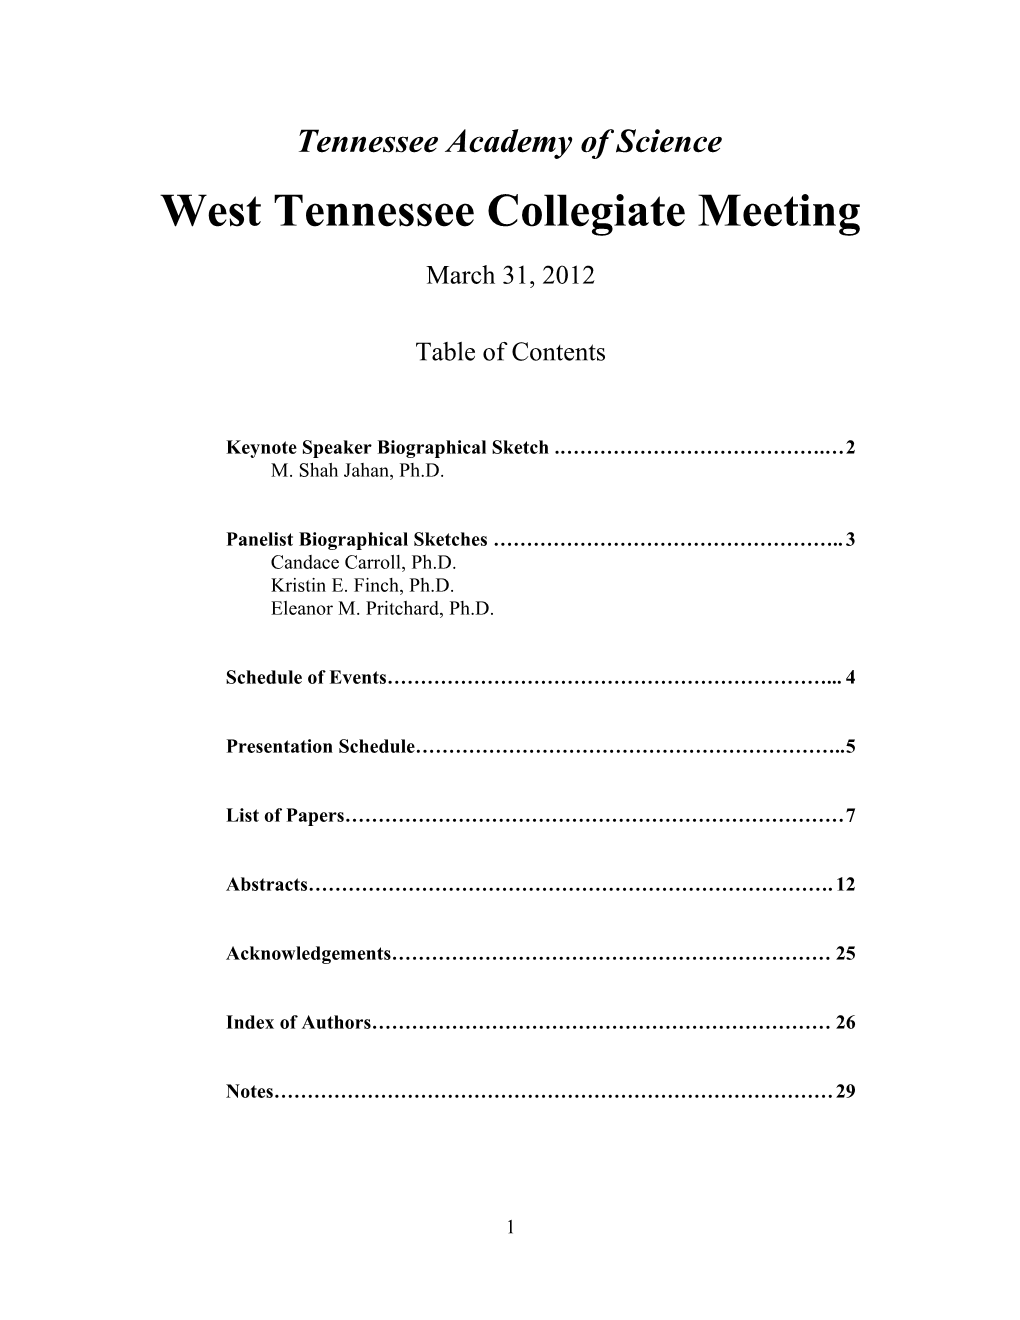 West Tennessee Collegiate Meeting